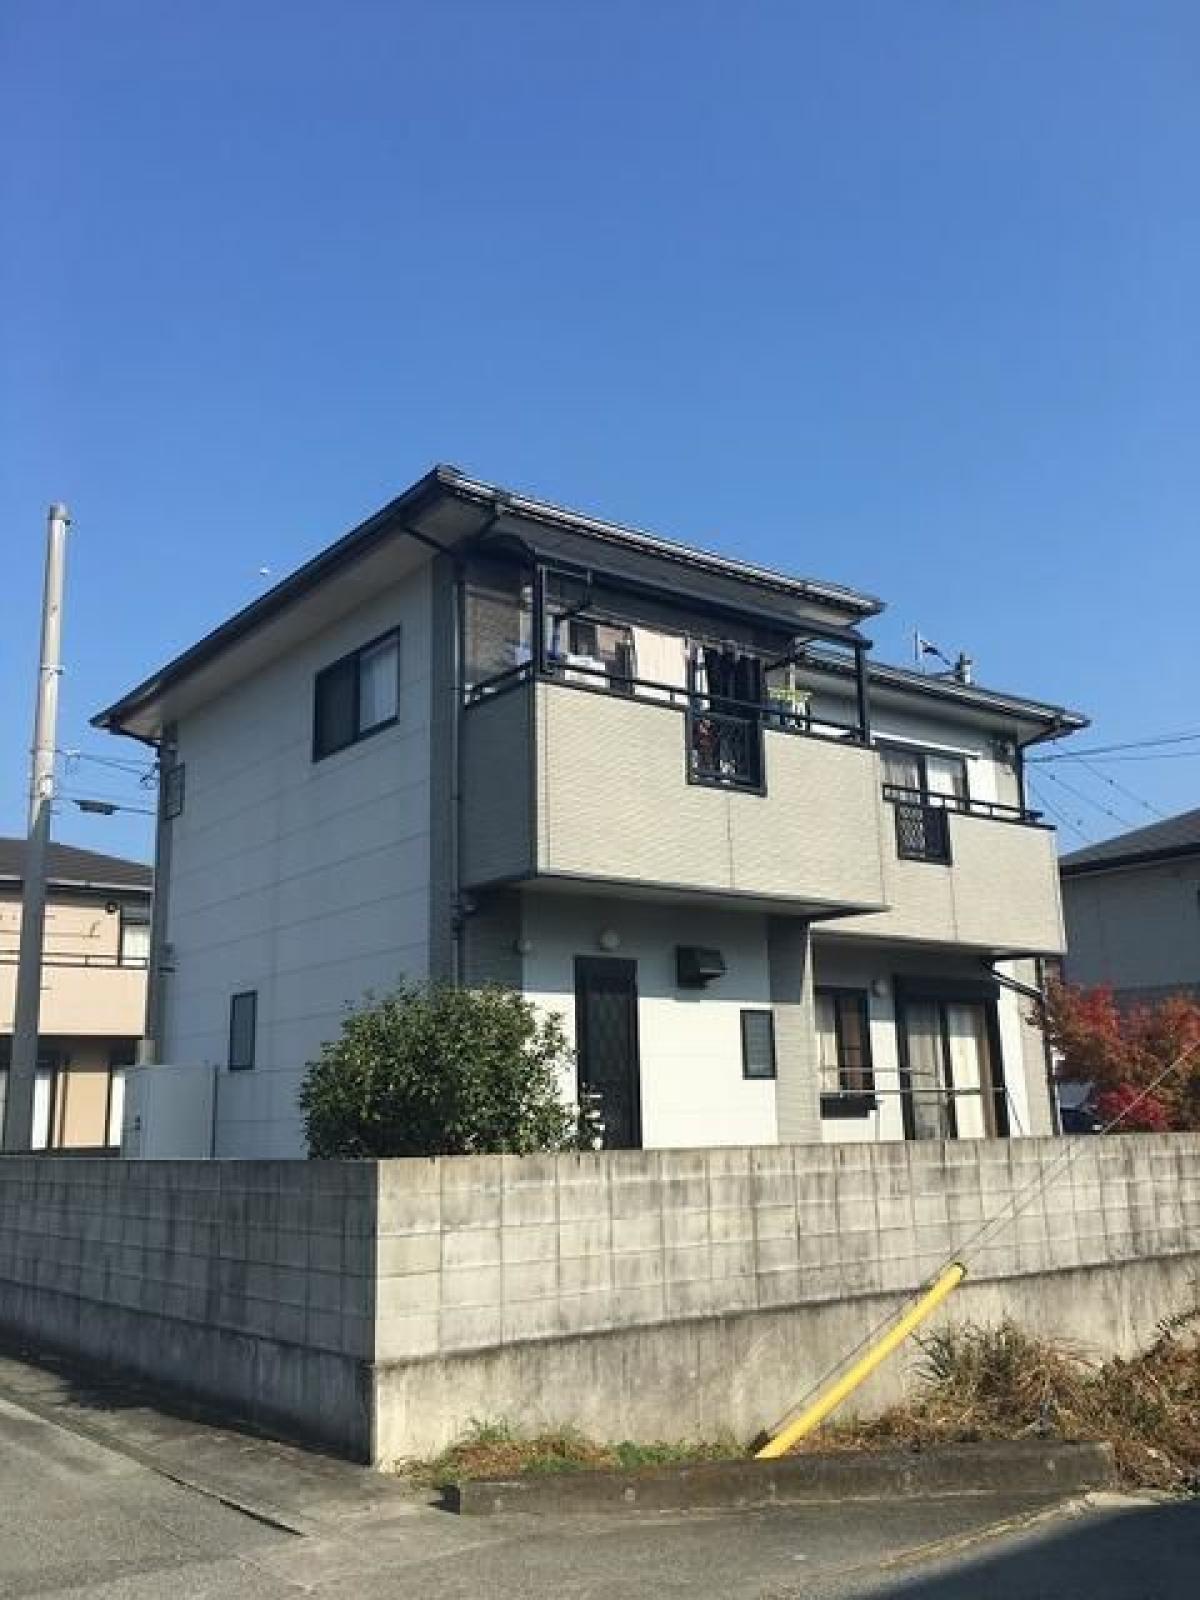 Picture of Home For Sale in Komatsushima Shi, Tokushima, Japan